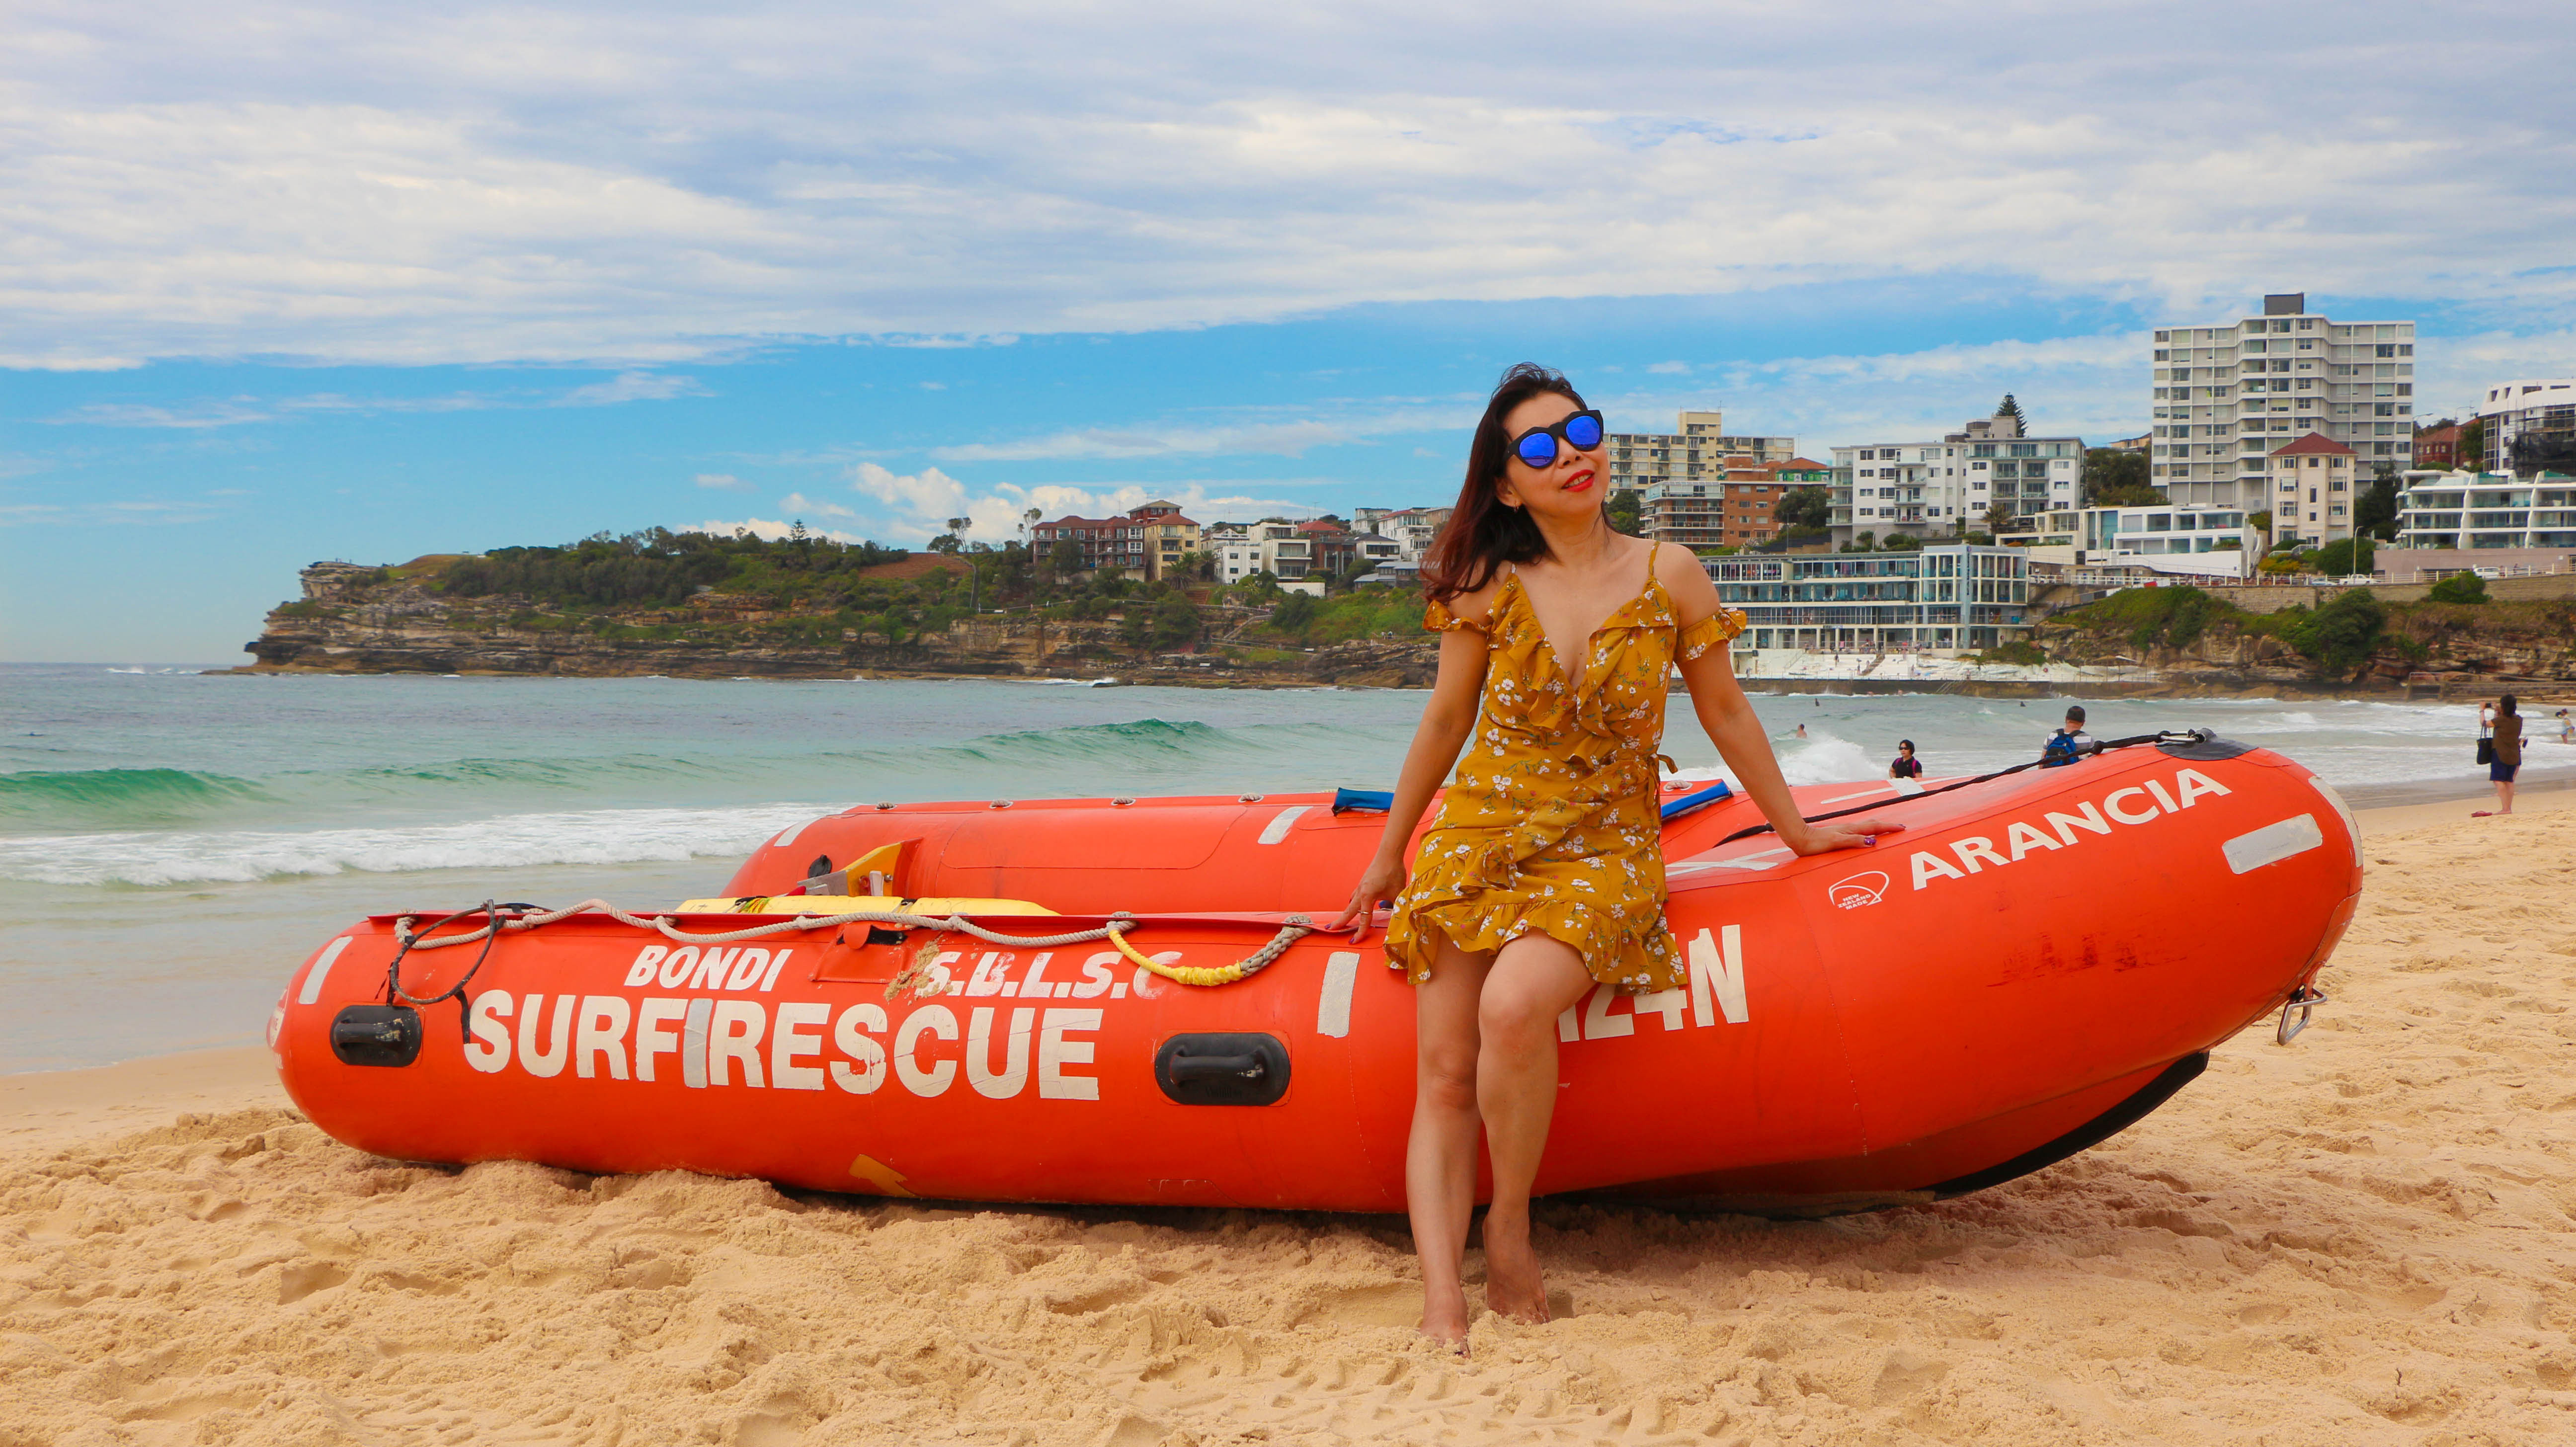 Bondi Surf Rescue